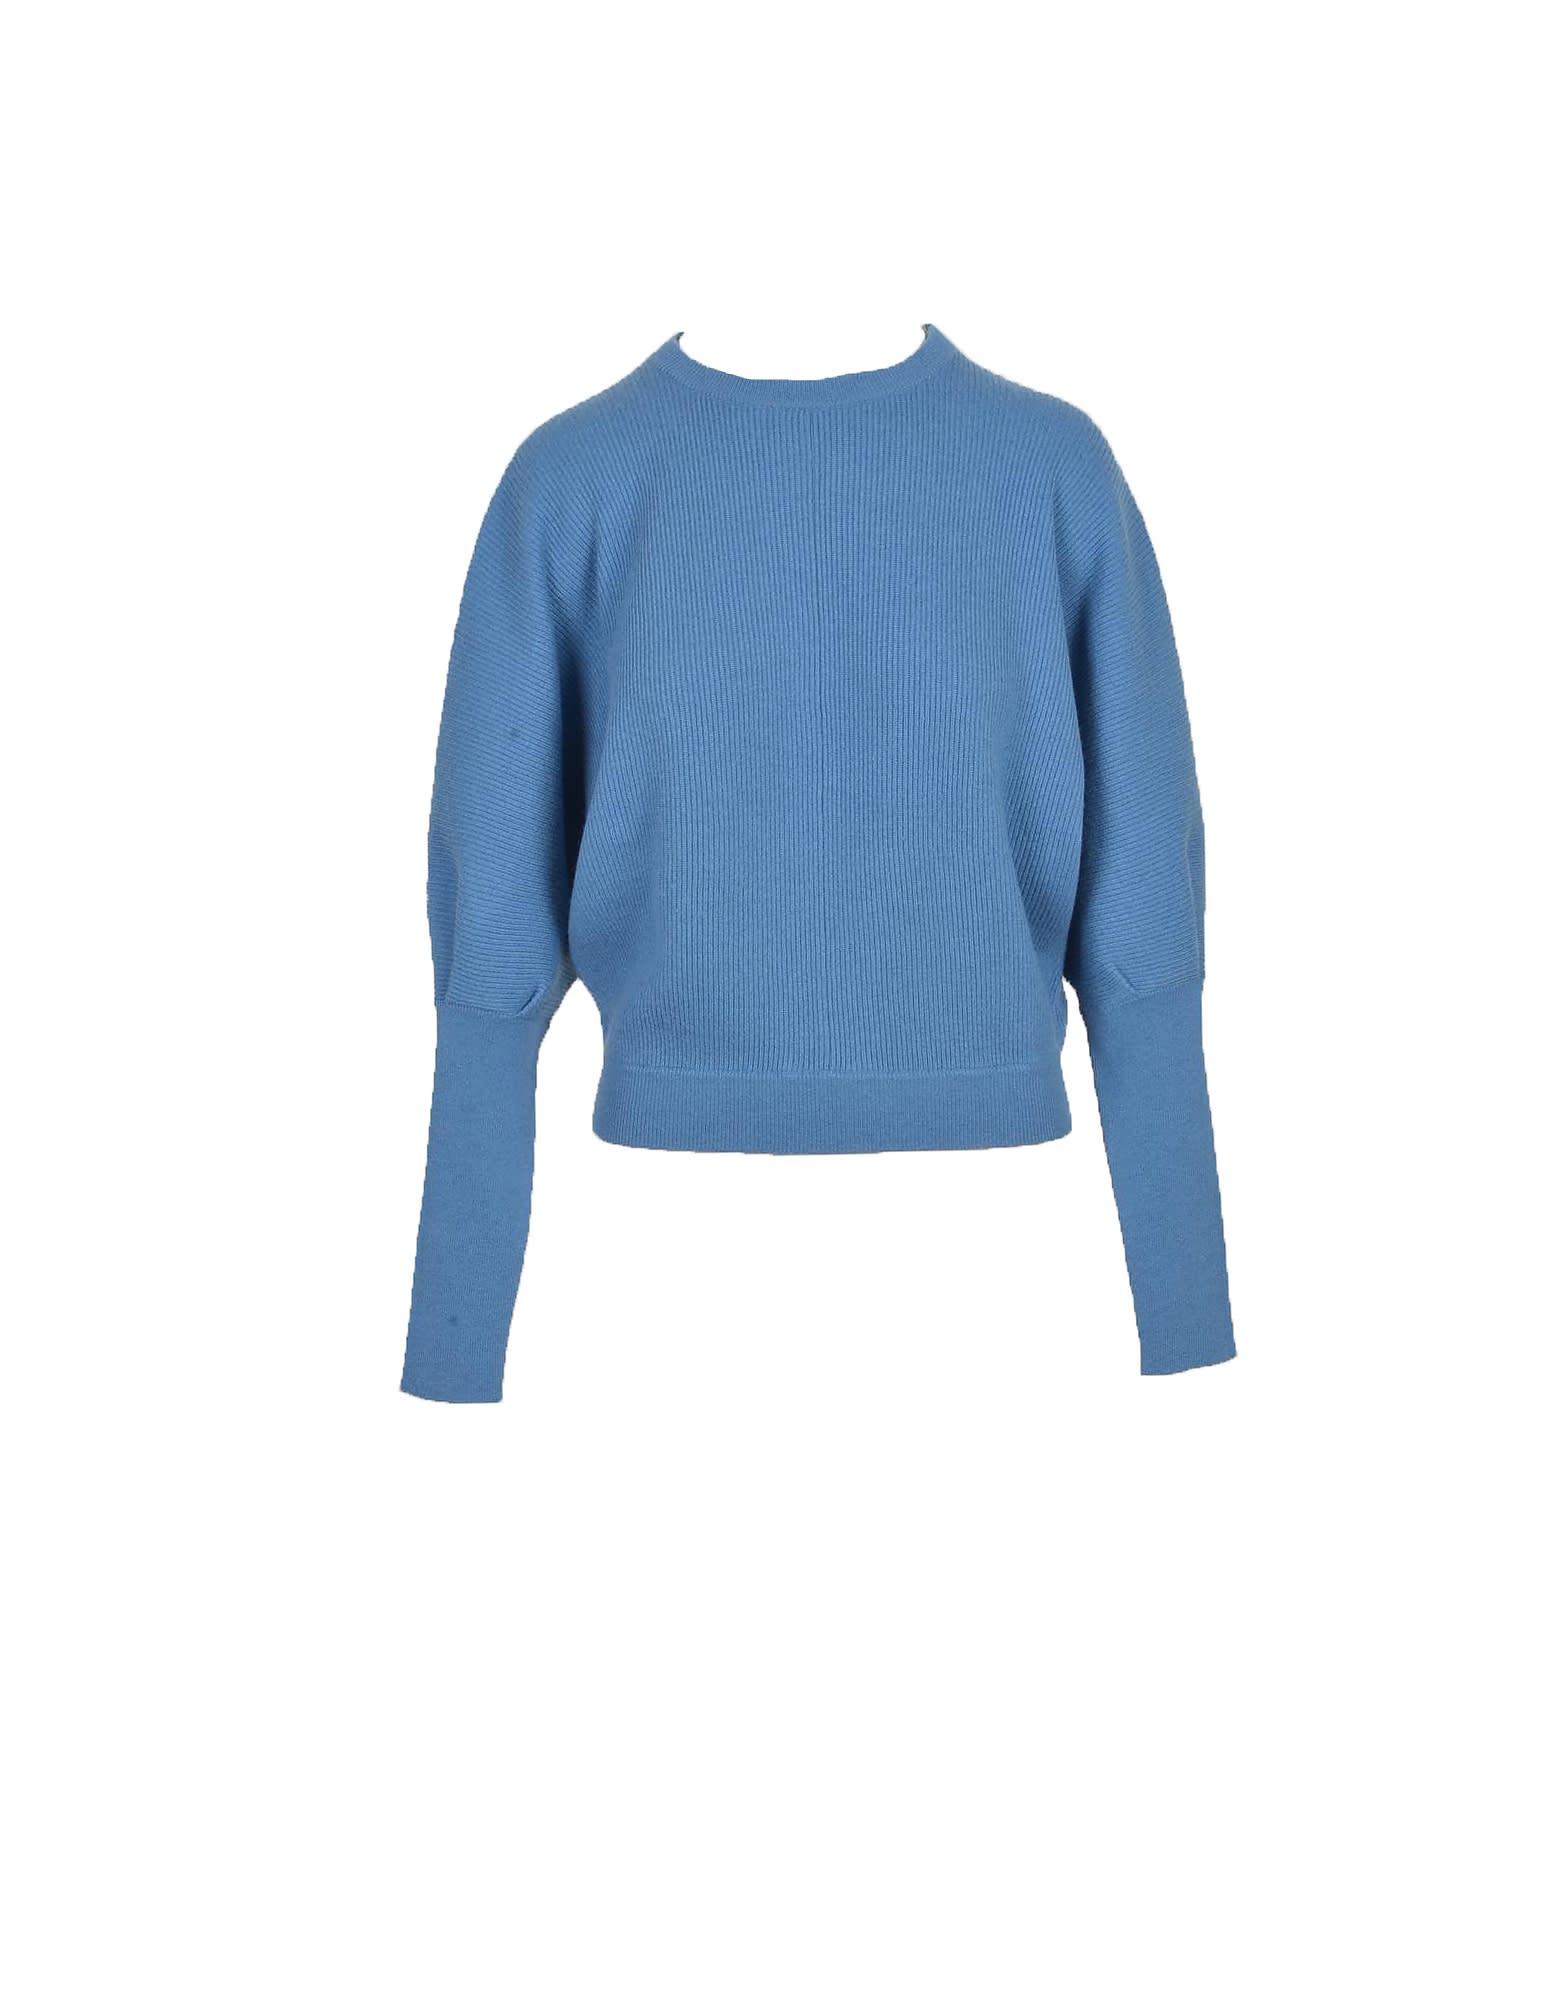 Brunello Cucinelli Womens Light Blue Sweater